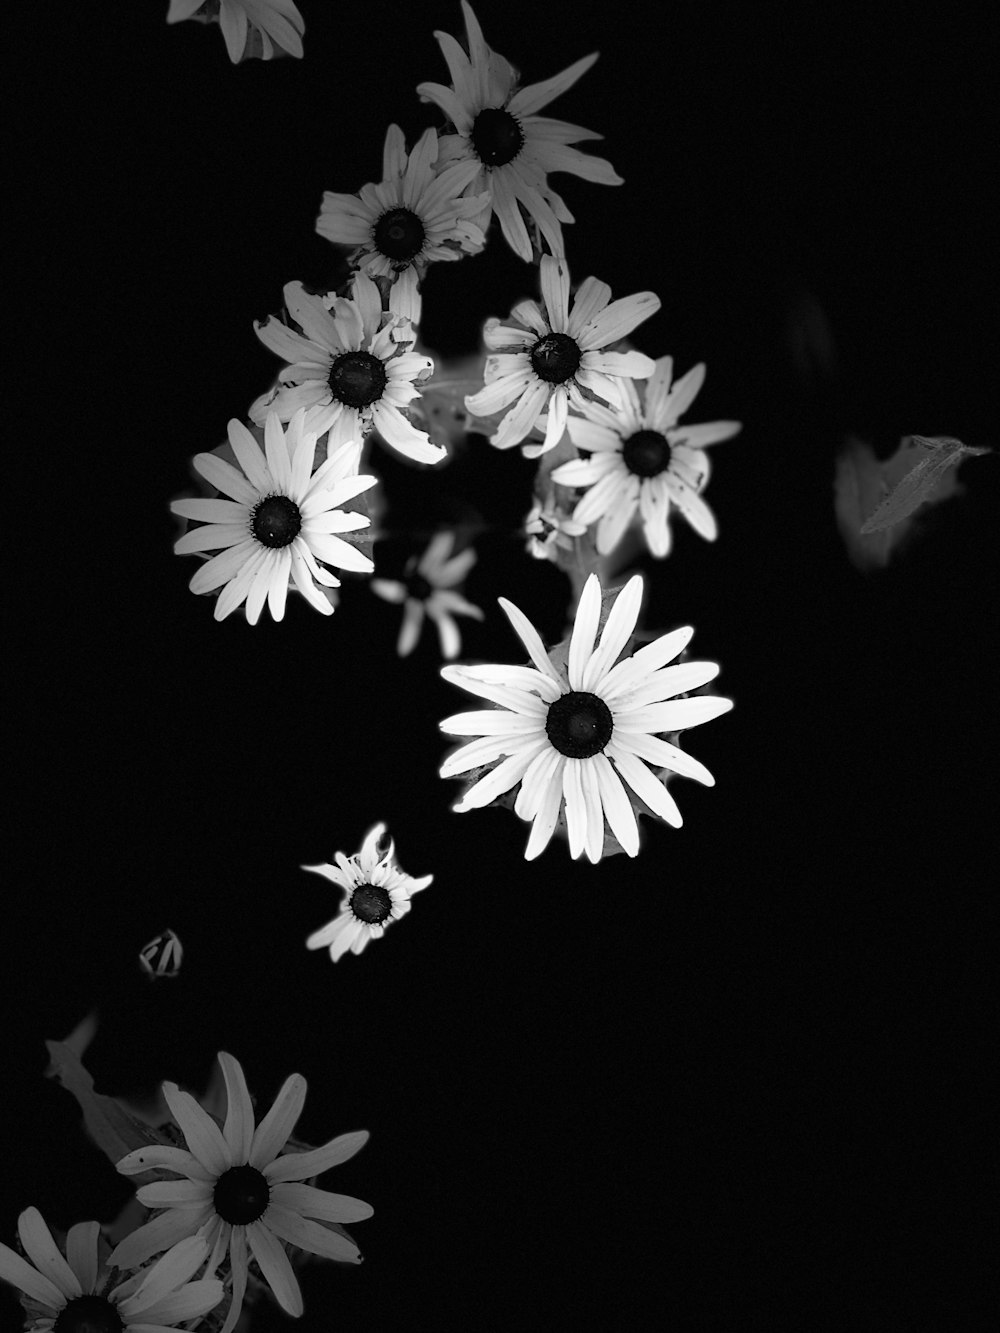 grayscale photography of flower photo – Free Al 35765 Image on Unsplash